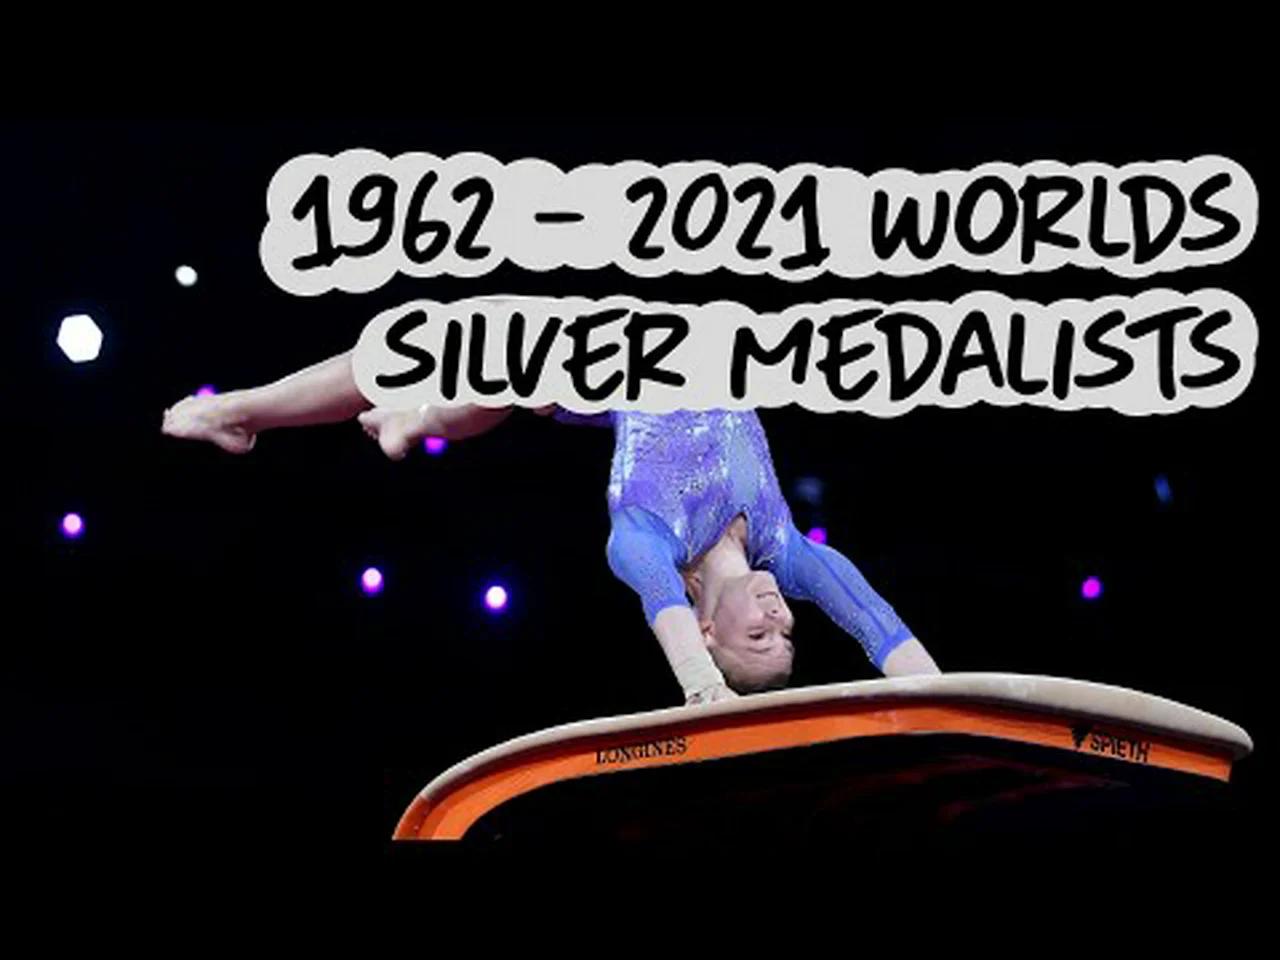 all-vault-silver-medalists-gymnastics-world-championships-1962-2021